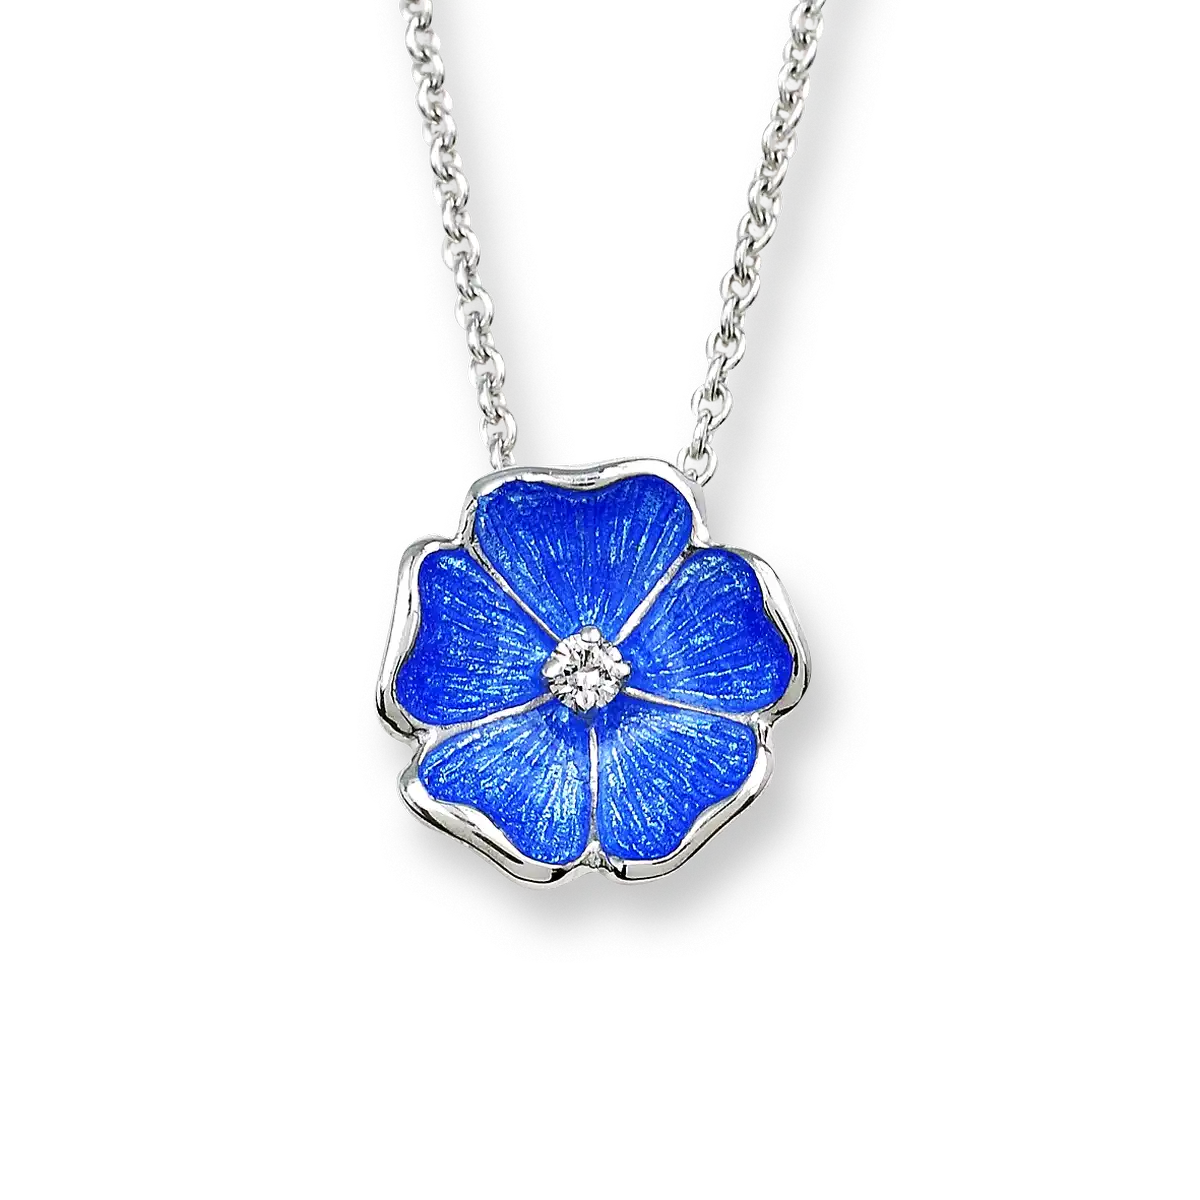 Blue Rose Necklace